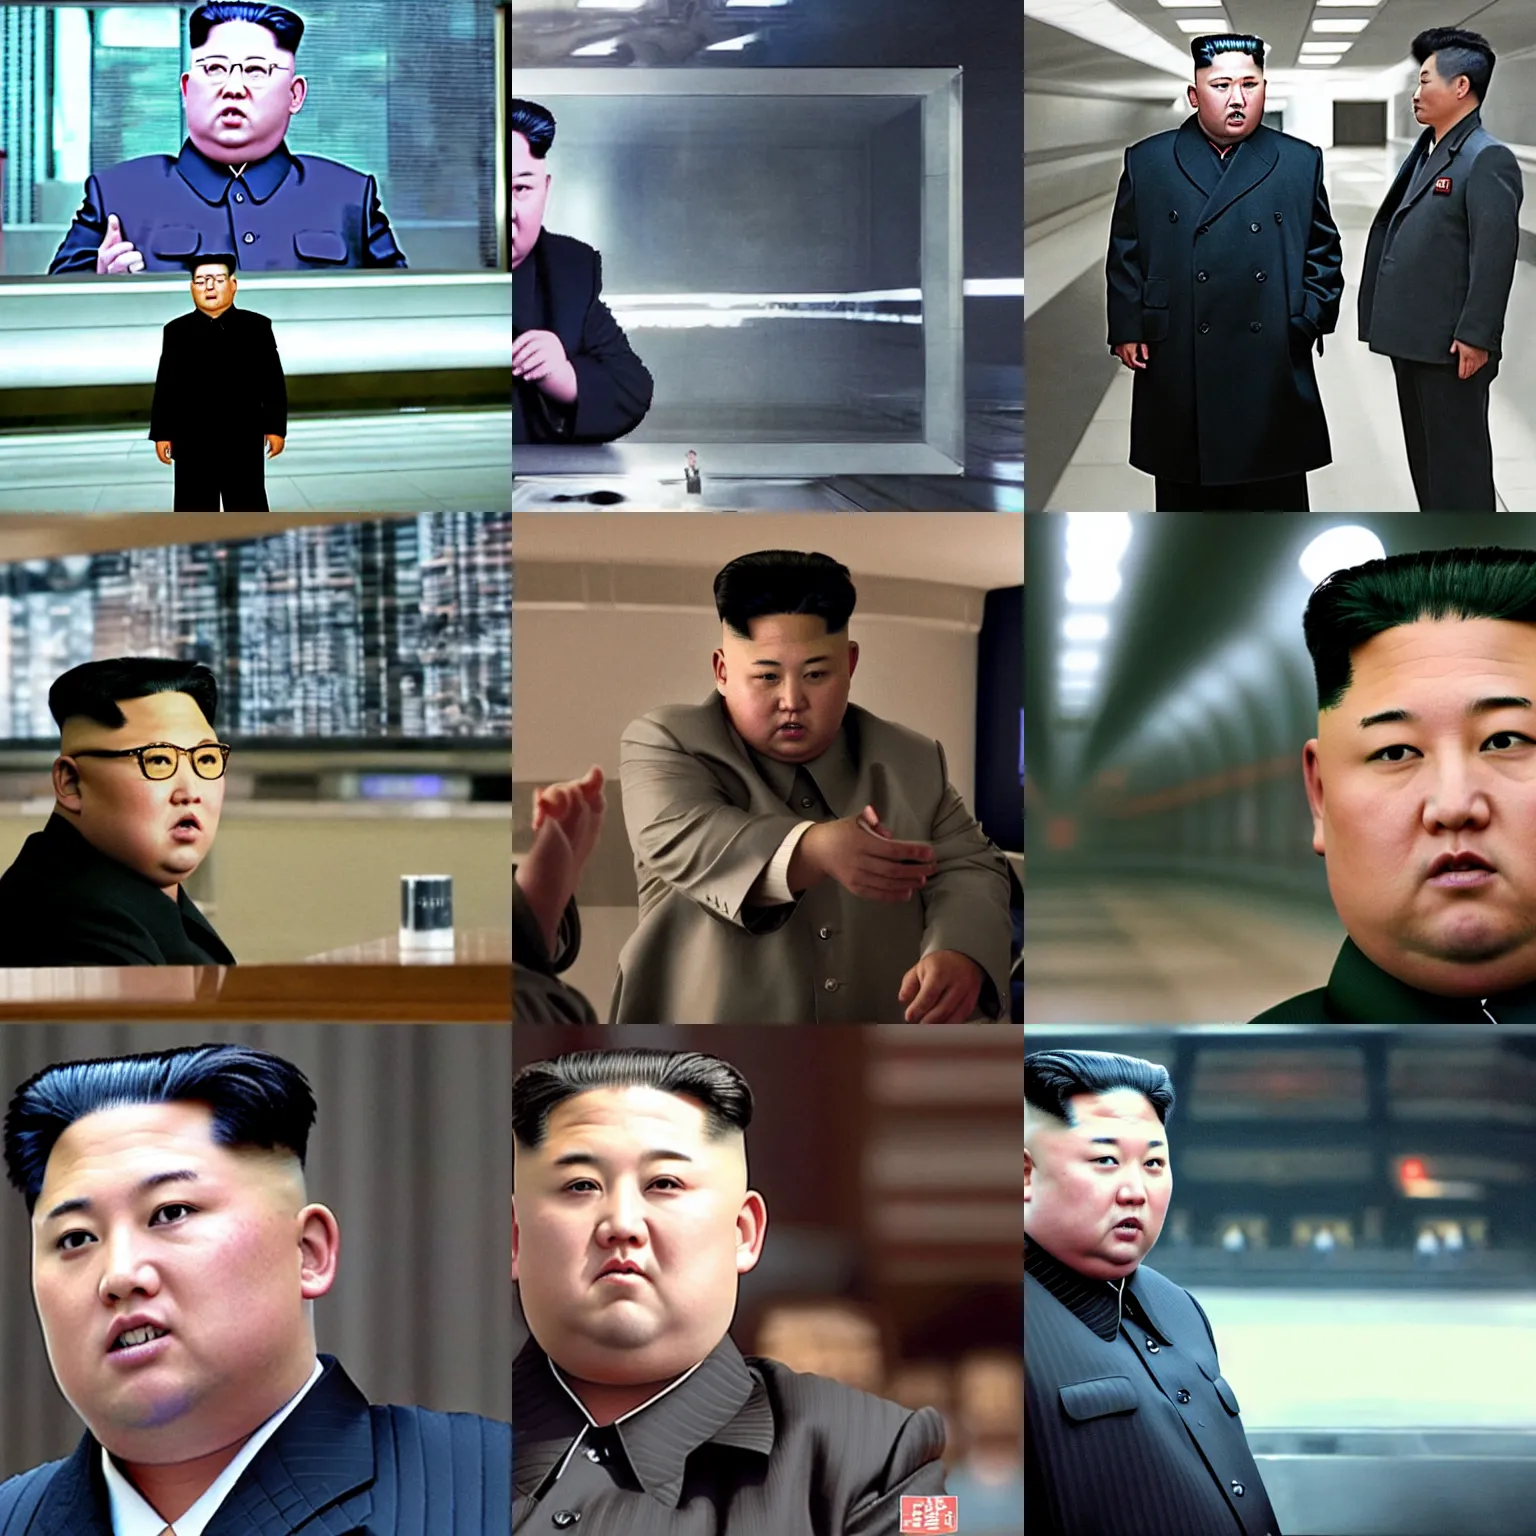 Prompt: Movie still of Kim Jong-Un in Minority Report